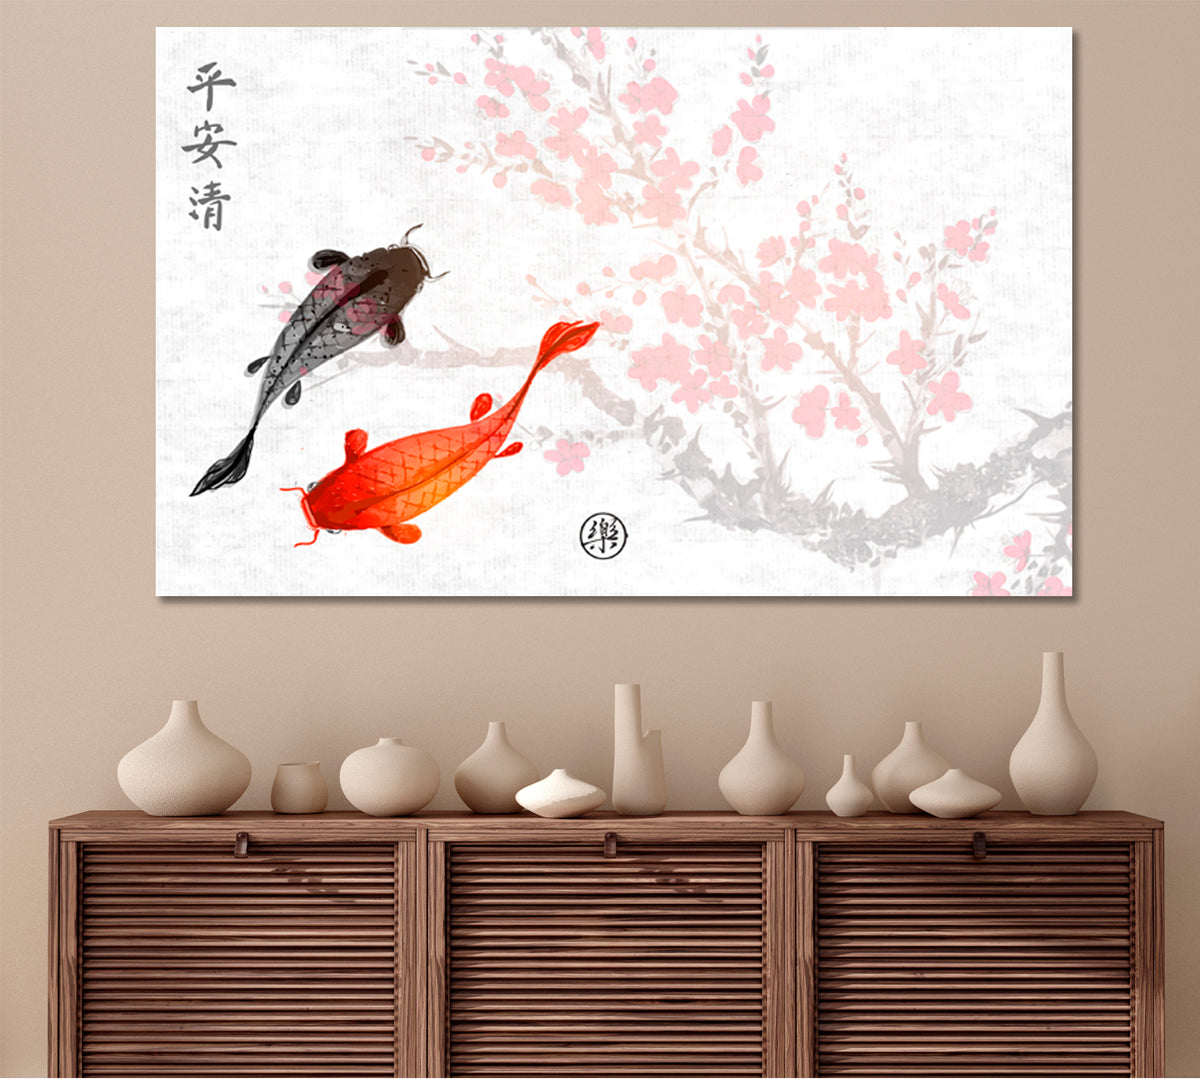 ZEN Sakura Koi Fishes Traditional Oriental Peace Tranquility Clarity Joy Asian Style Canvas Print Wall Art Artesty 1 panel 24" x 16" 